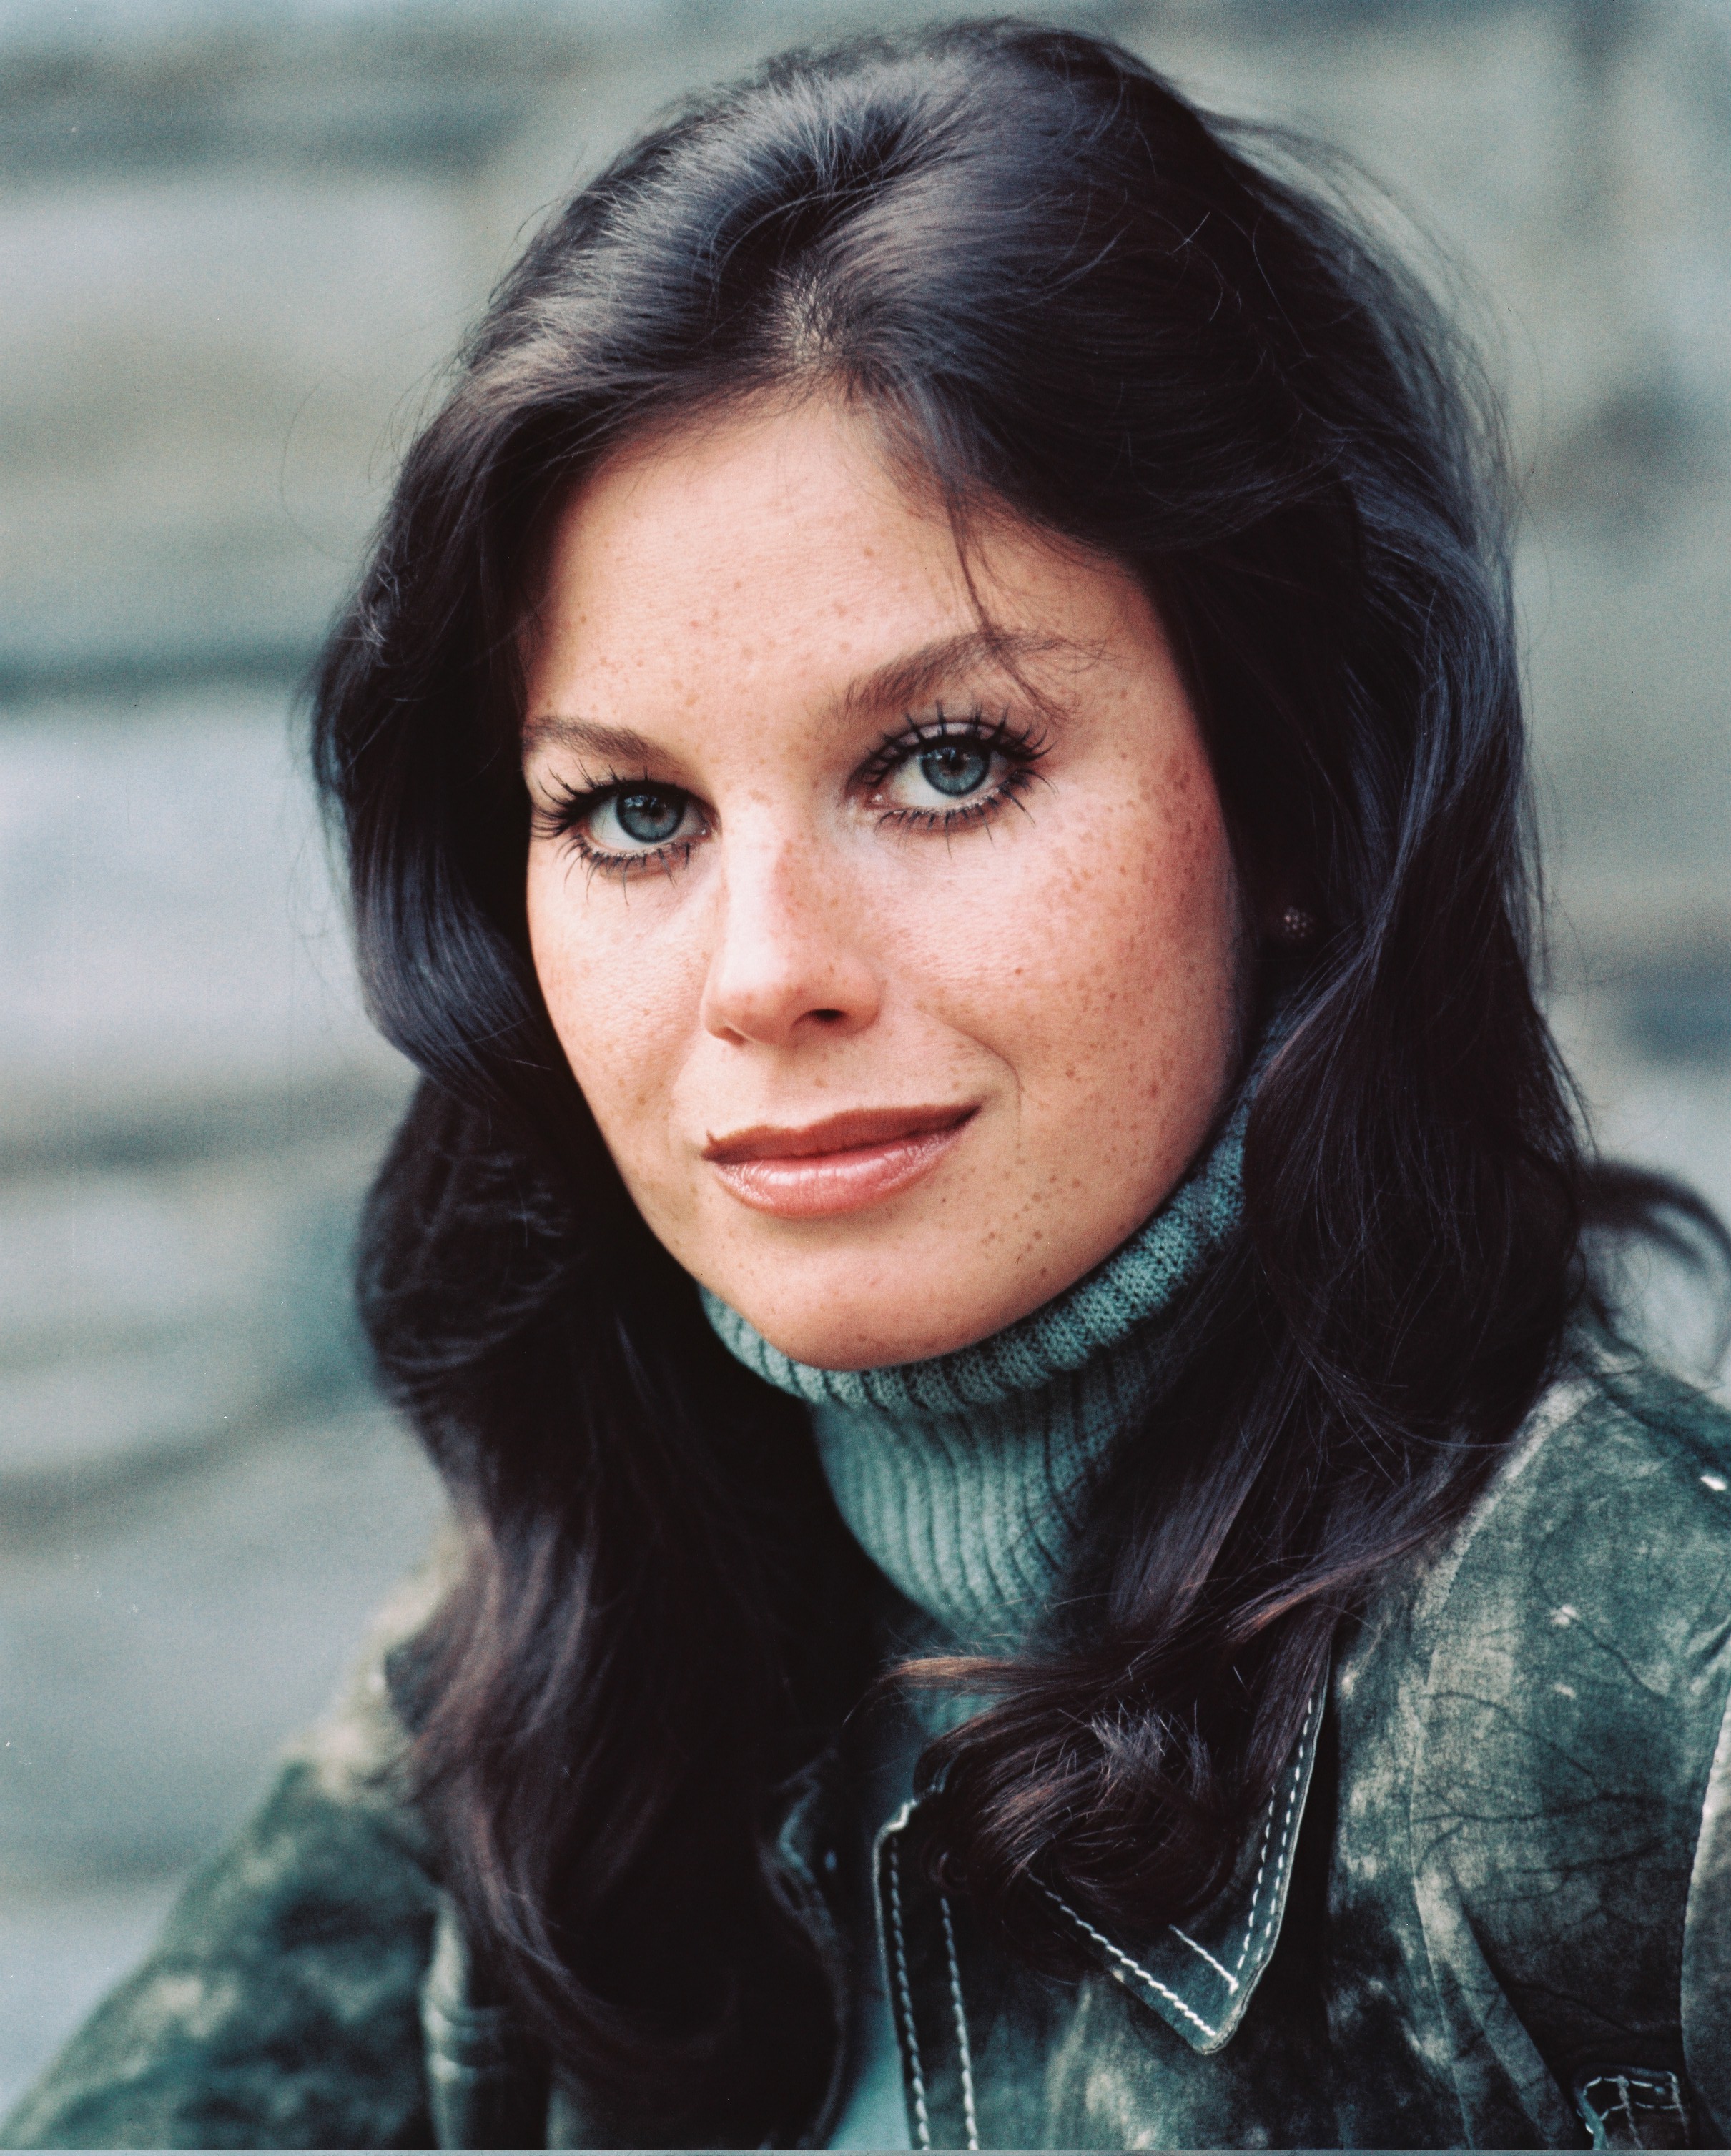 Lana Wood's portrait, circa 1970. | Source: Getty Images